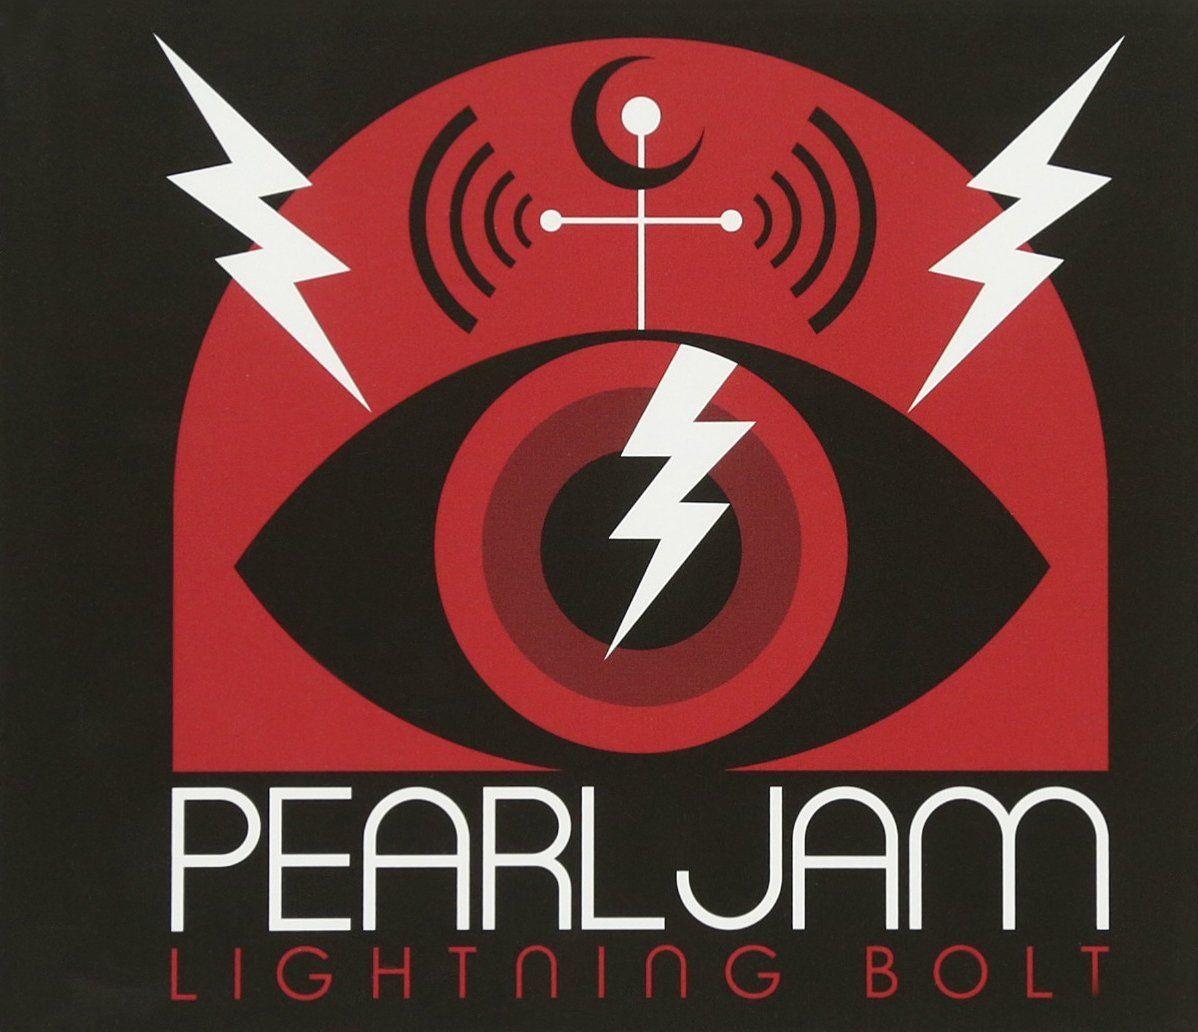 Lightning Bolt Restaurant Logo - Pearl Jam - Lightning Bolt - Amazon.com Music